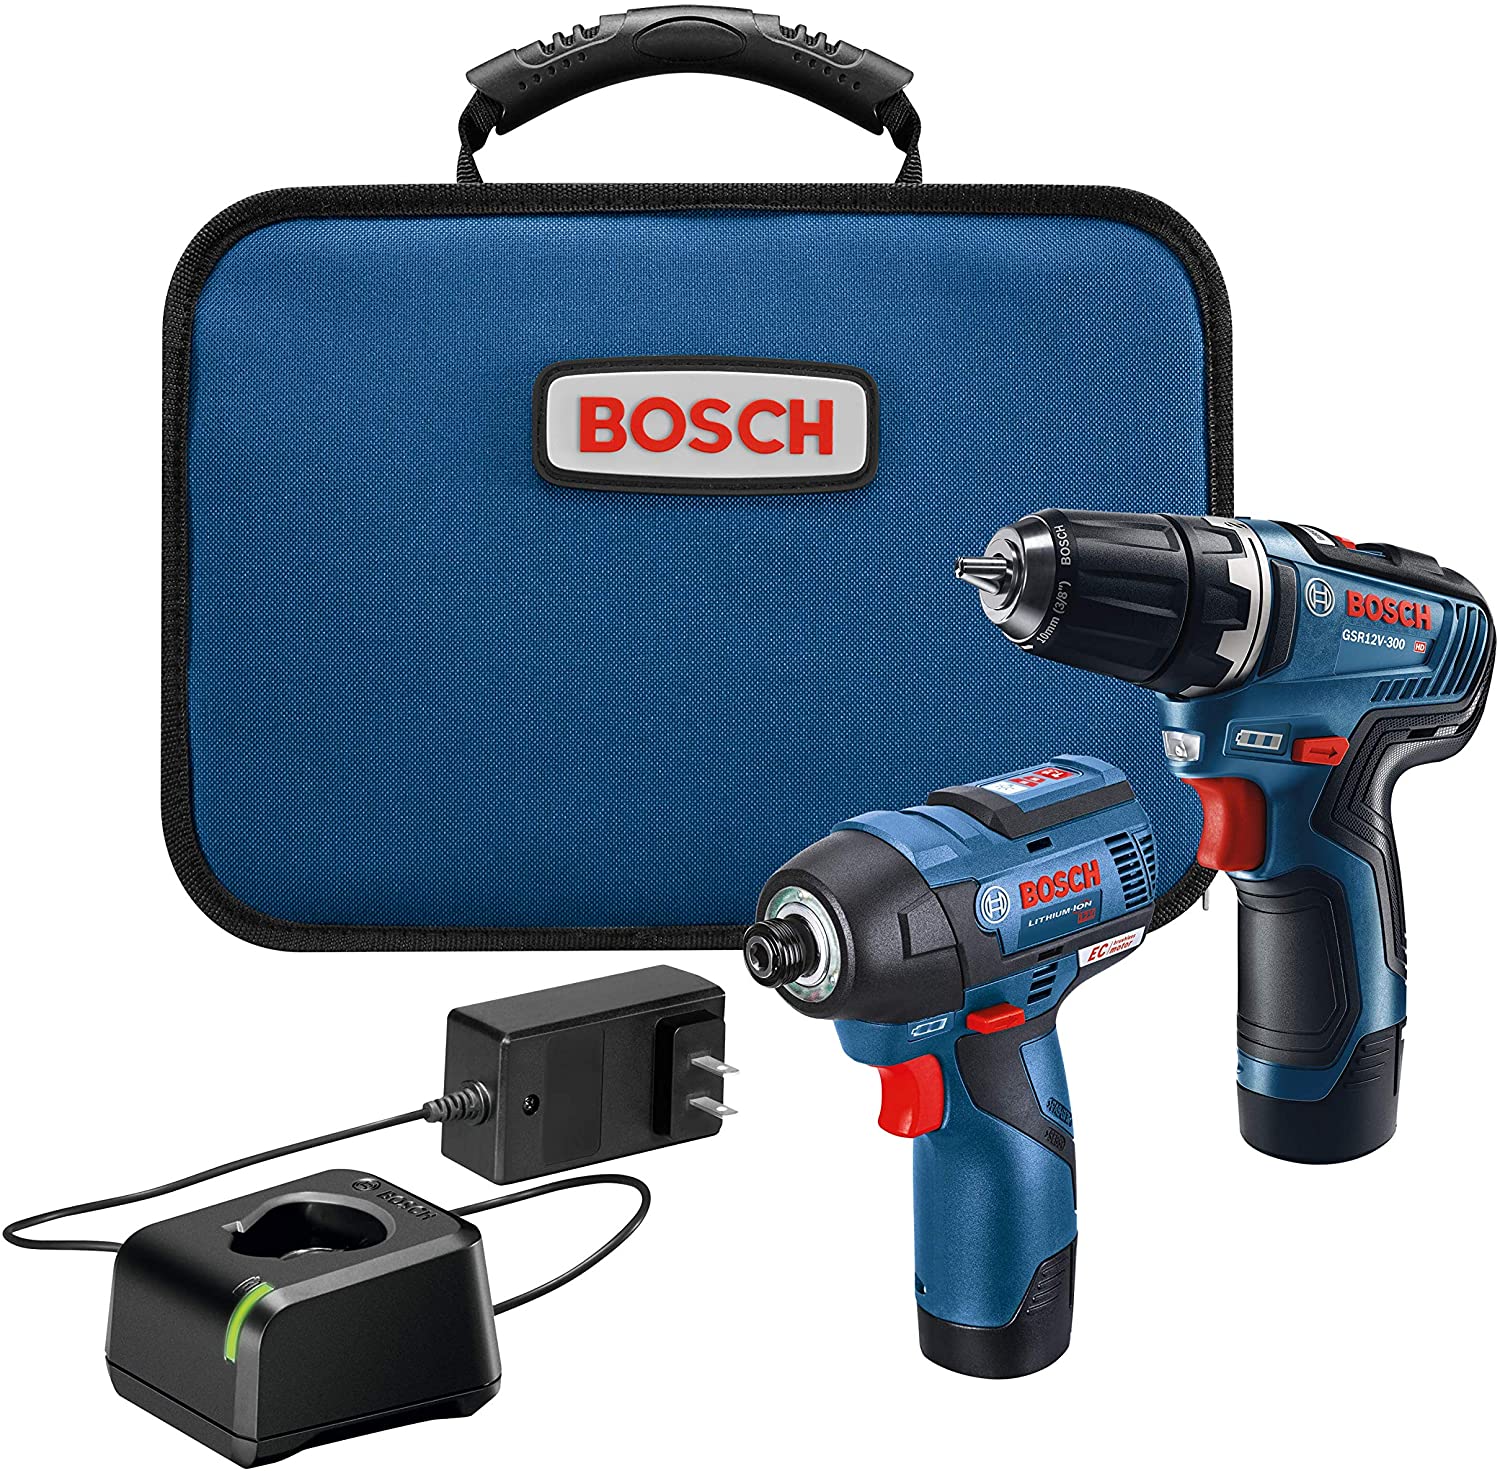 Bosch Brushless Drill/Driver set $129